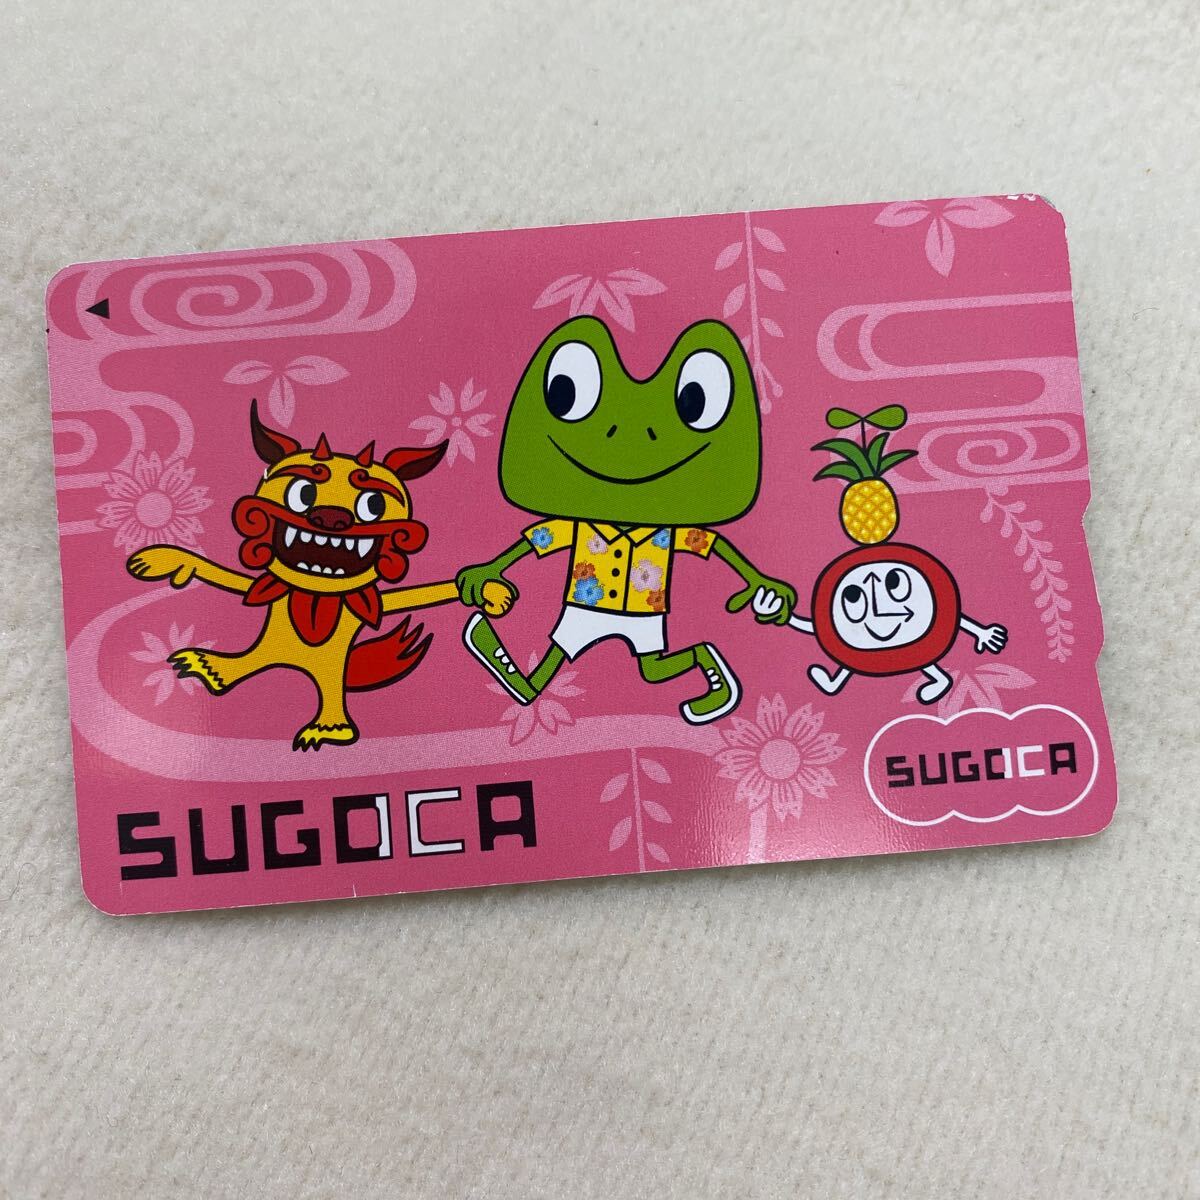 JRJR九州 SUGOCA 沖縄バージョン カエル 蛙 Suica PASMO 限定カード 限定デザイン_画像1